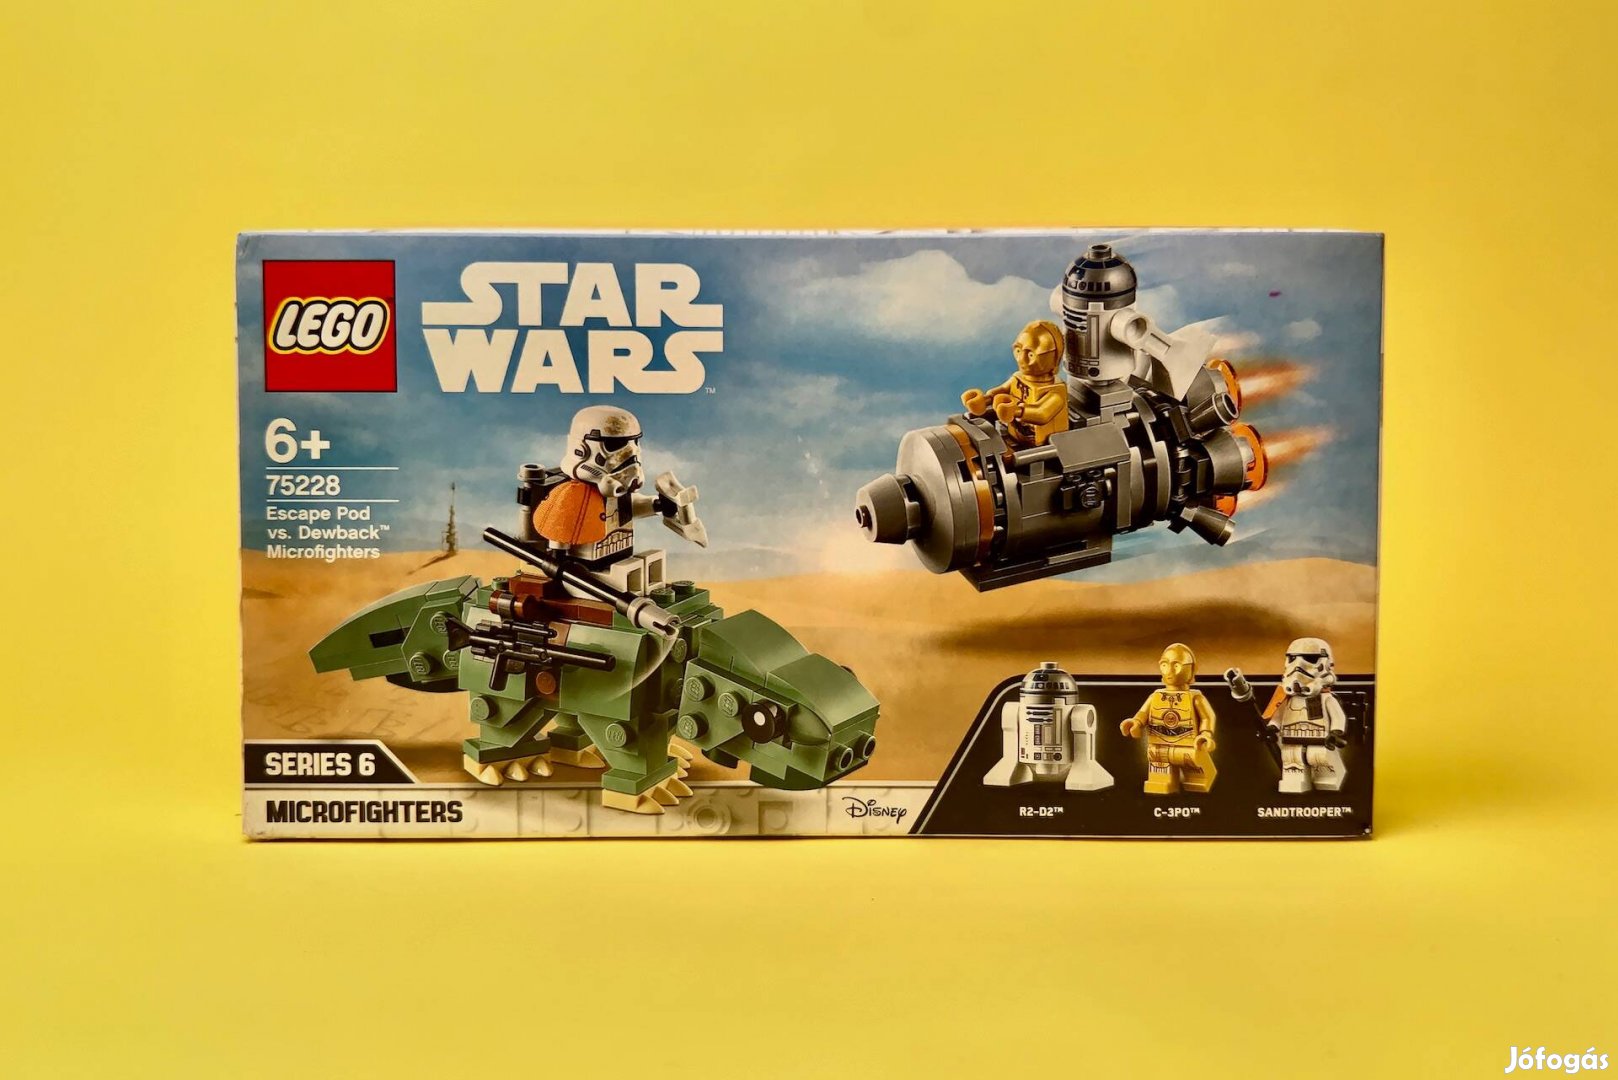 LEGO Star Wars 75228 Escape Pod vs. Dewback Microf., Uj, Bontatlan